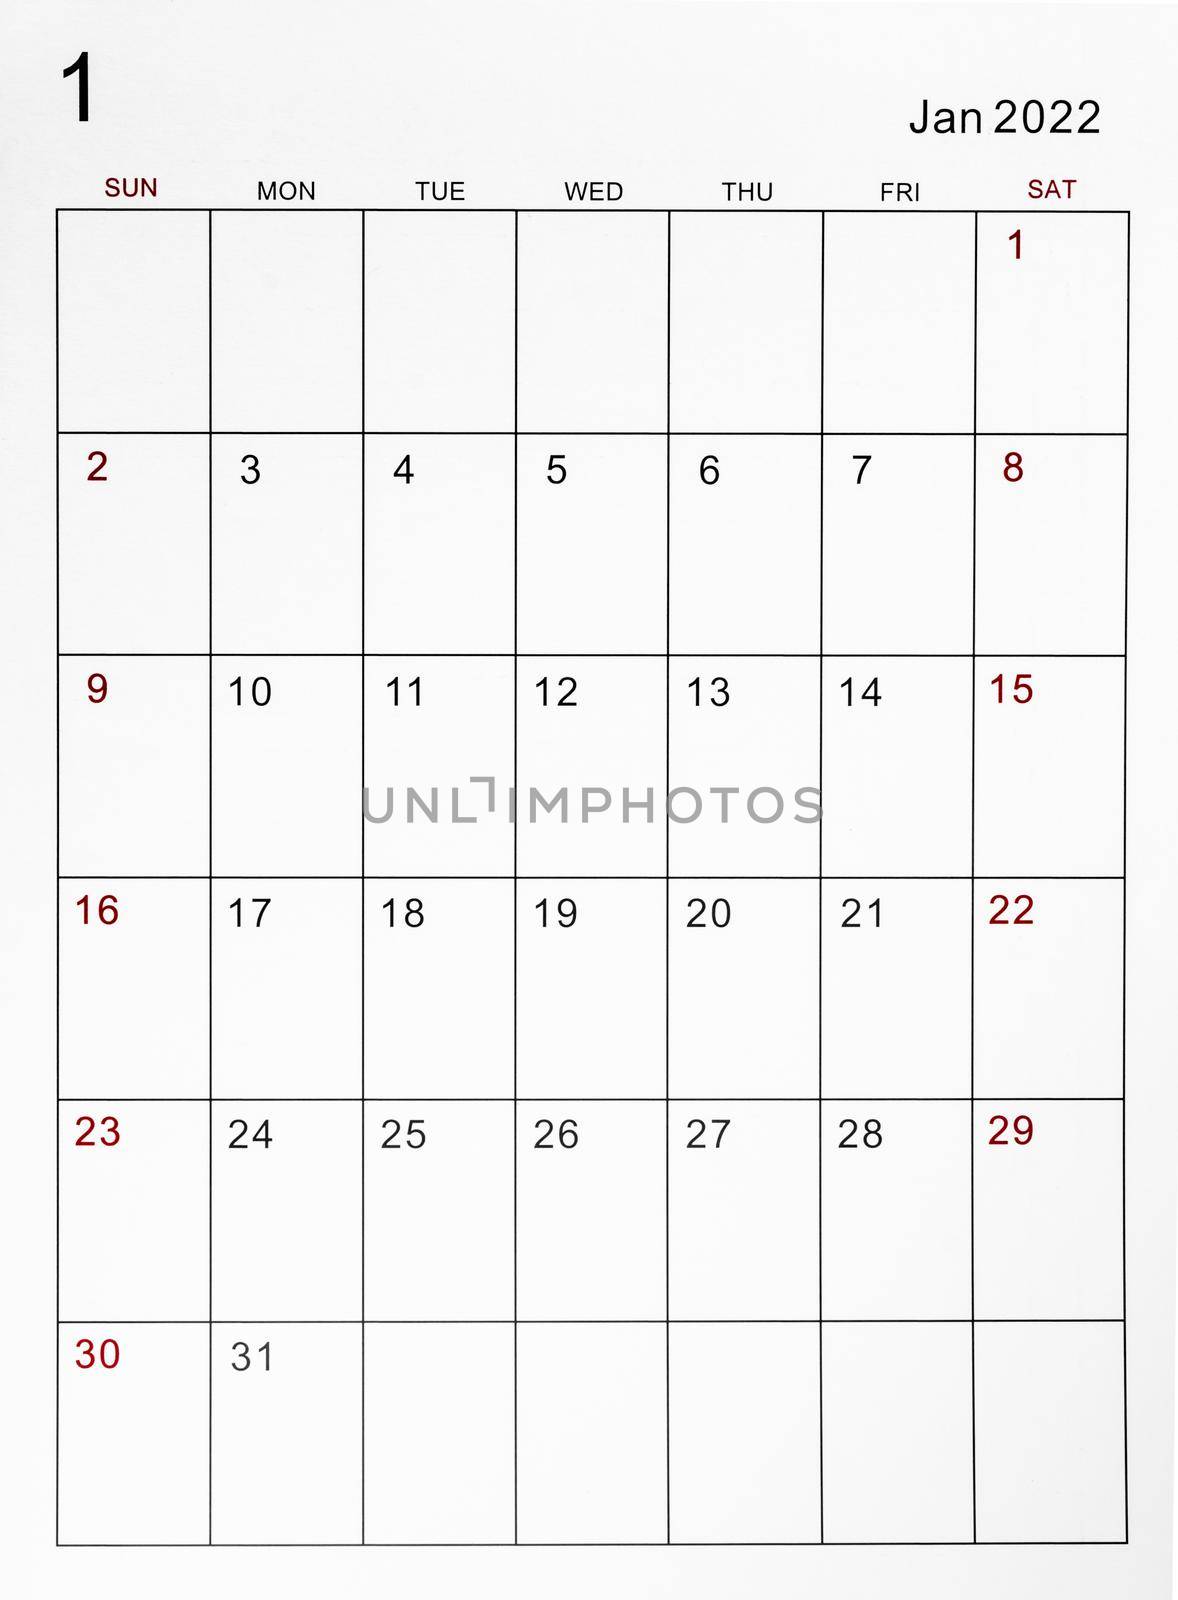 The January 2022 calendar template.